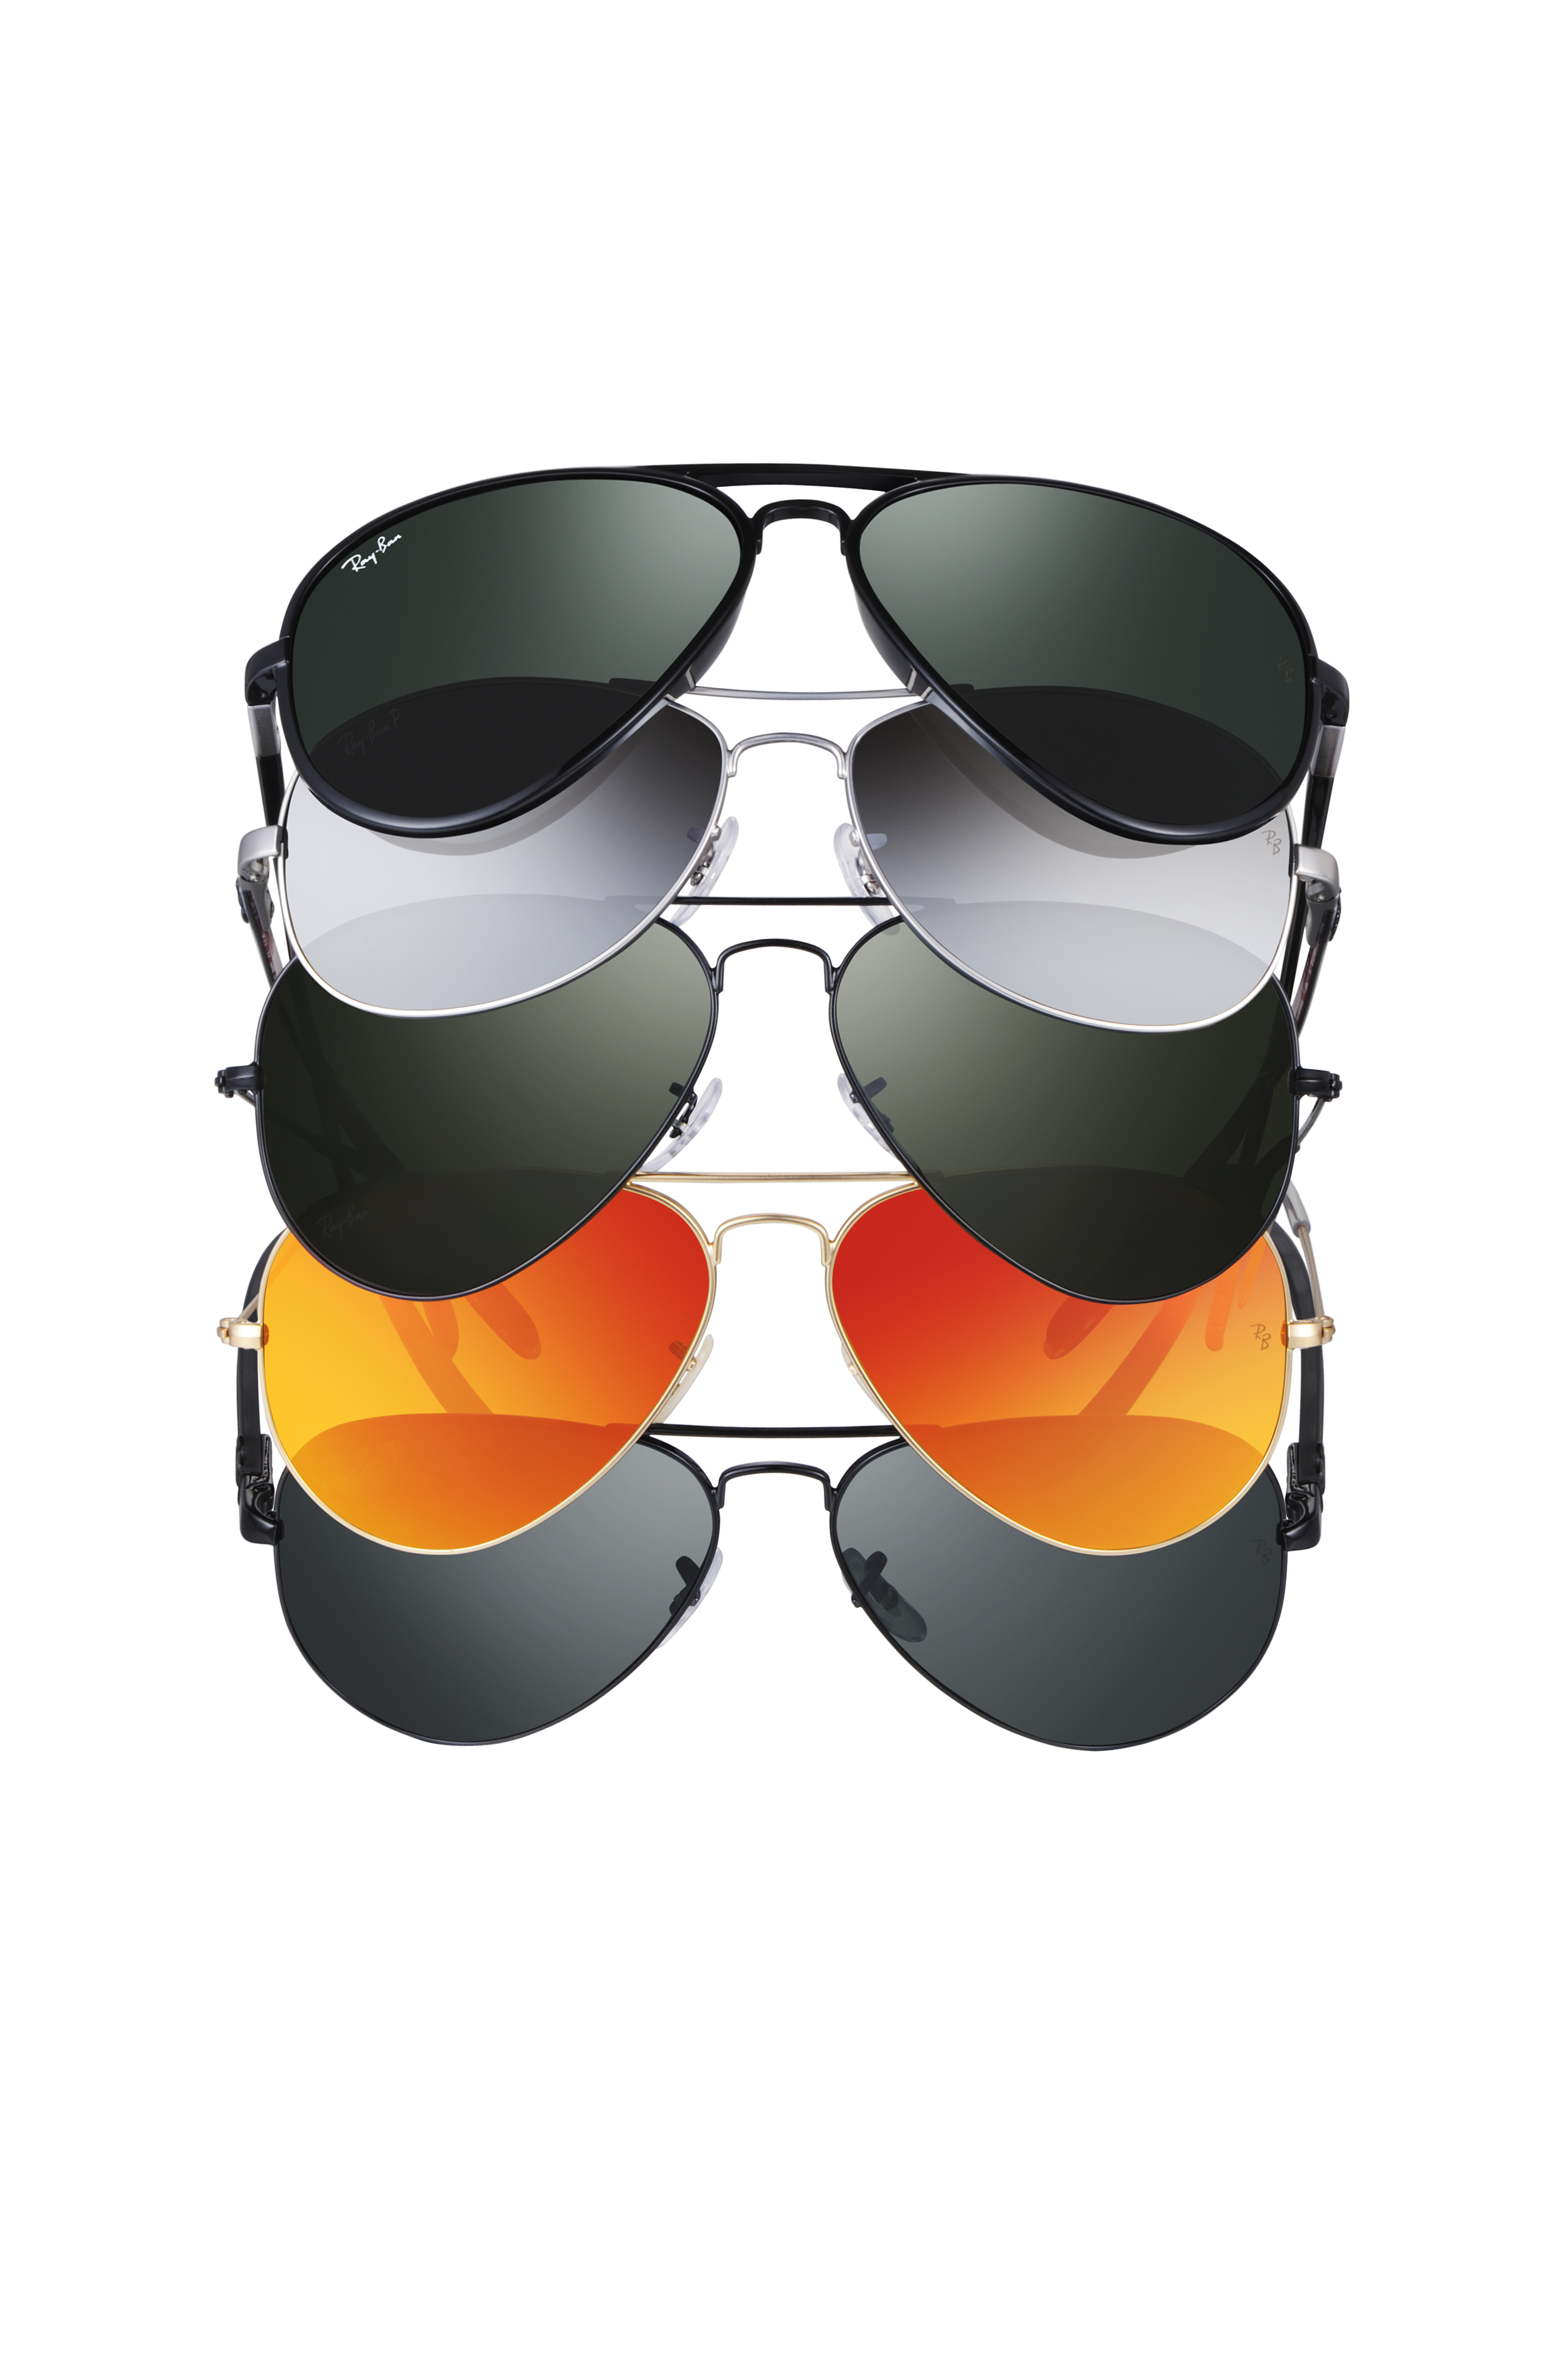 5 Questões que podem ajudar na escolha dos Óculos de Sol